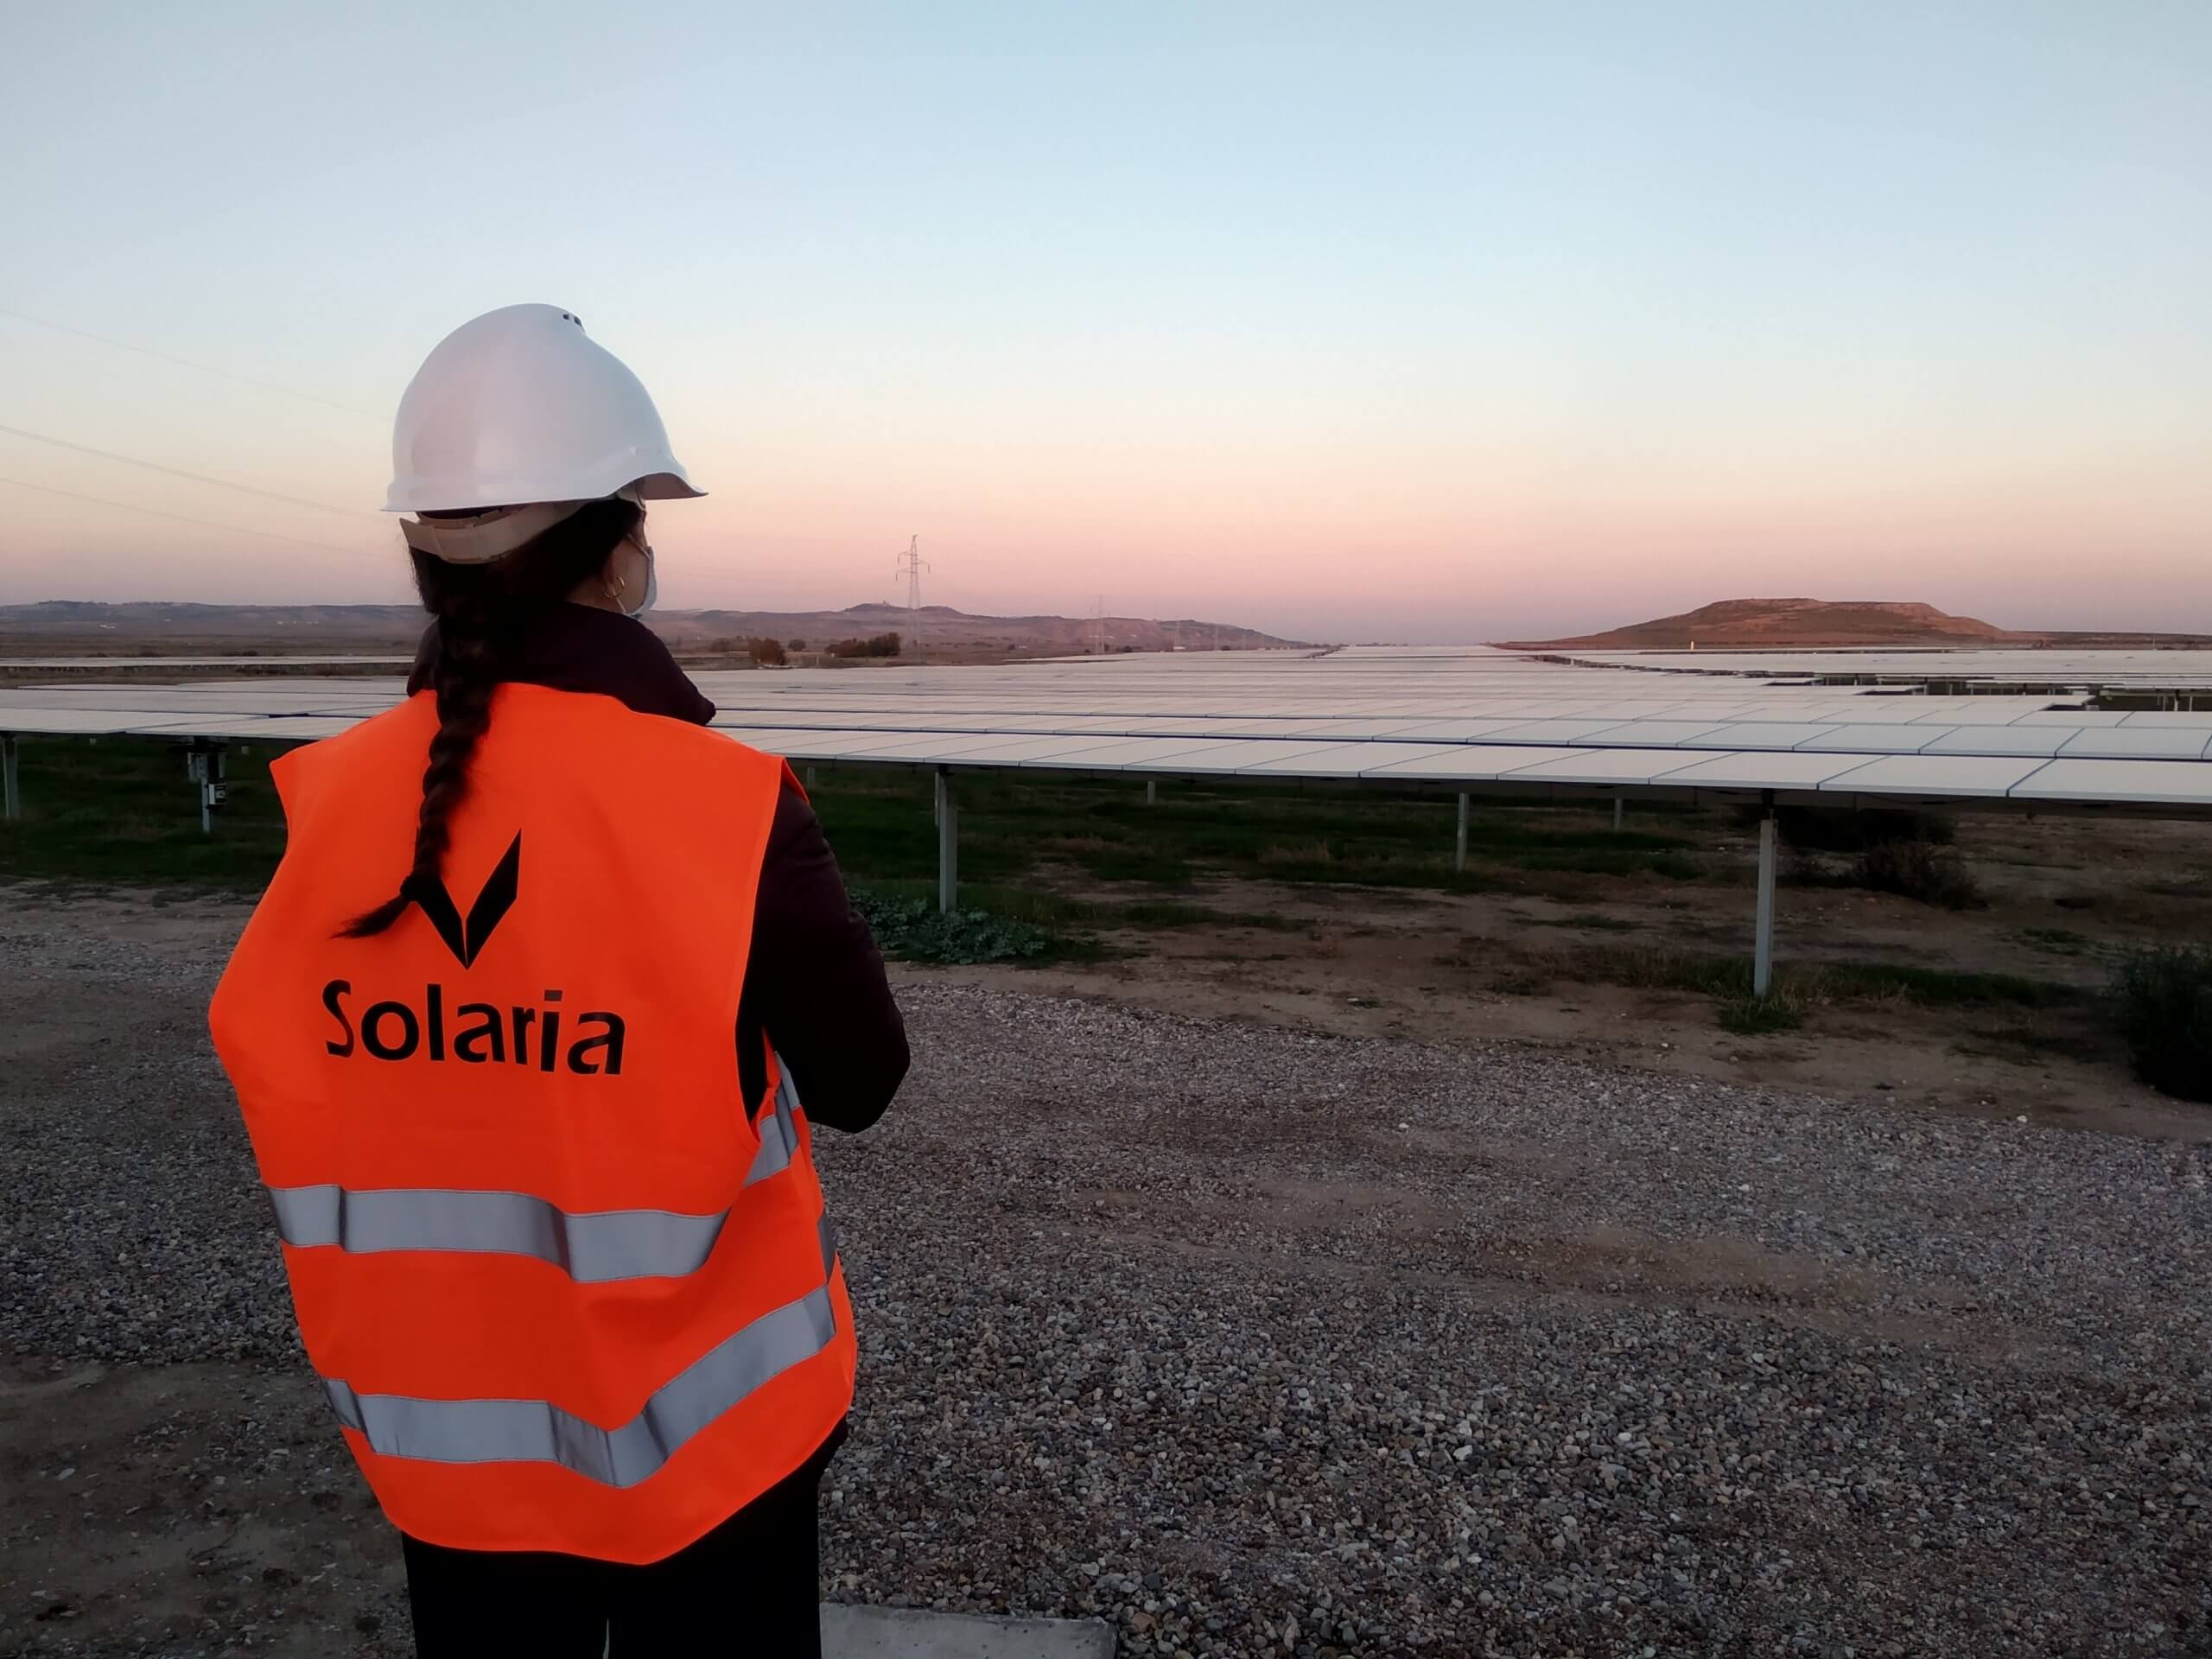 Solaria convenes the 2022 General Shareholders Meeting